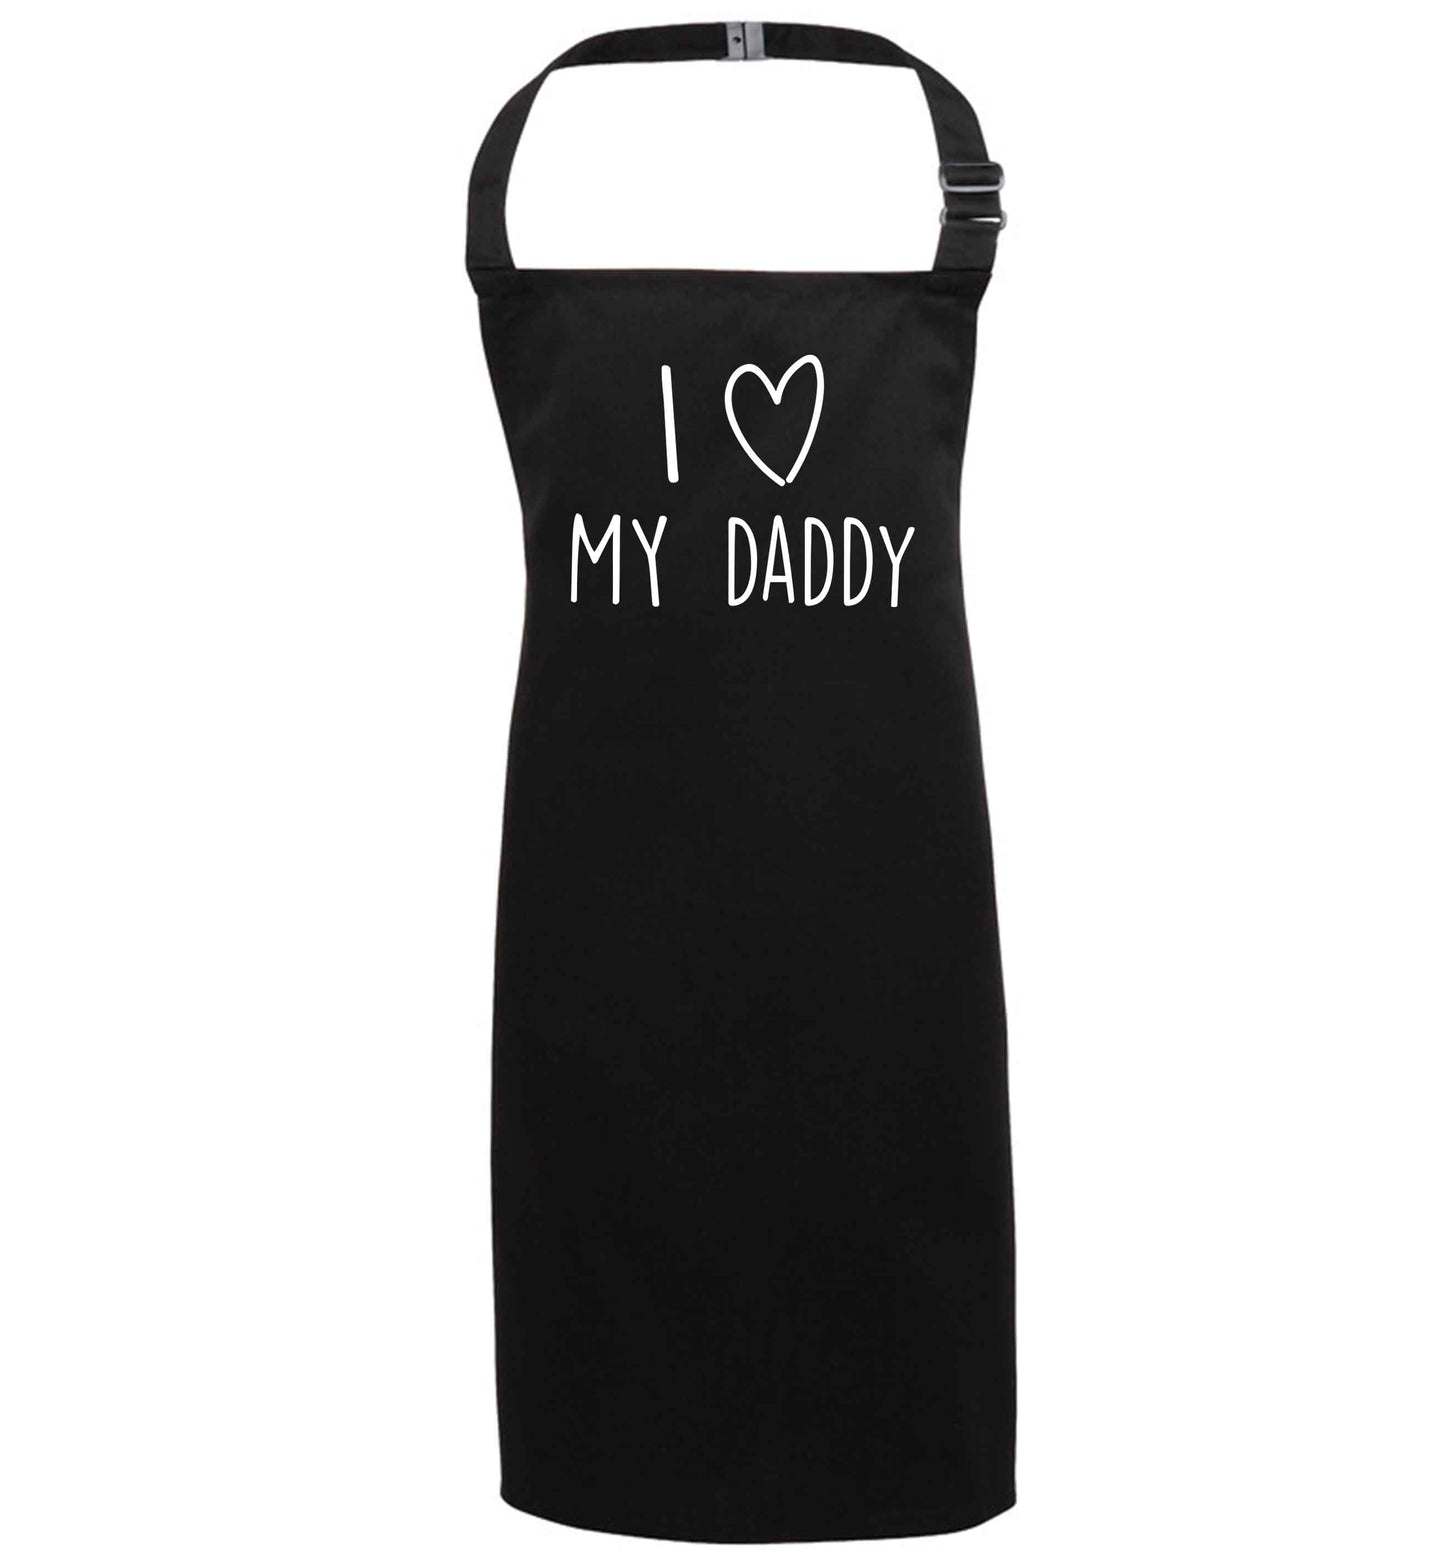 I love my daddy black apron 7-10 years